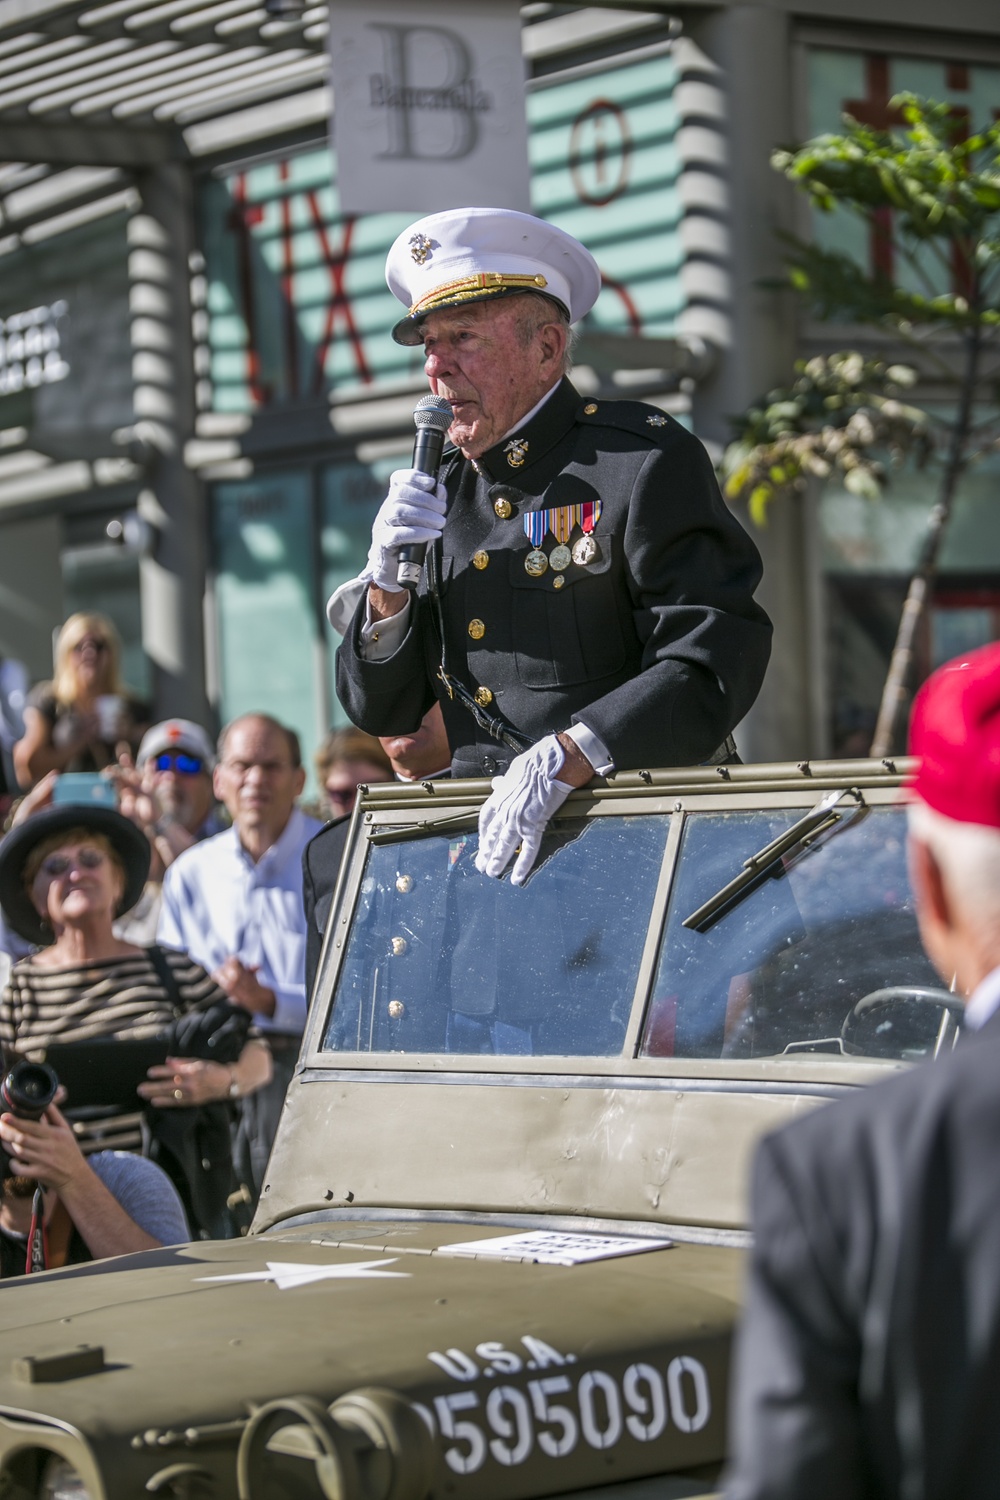 Commander of Marine Forces Reserve attends San Francisco Fleet Week